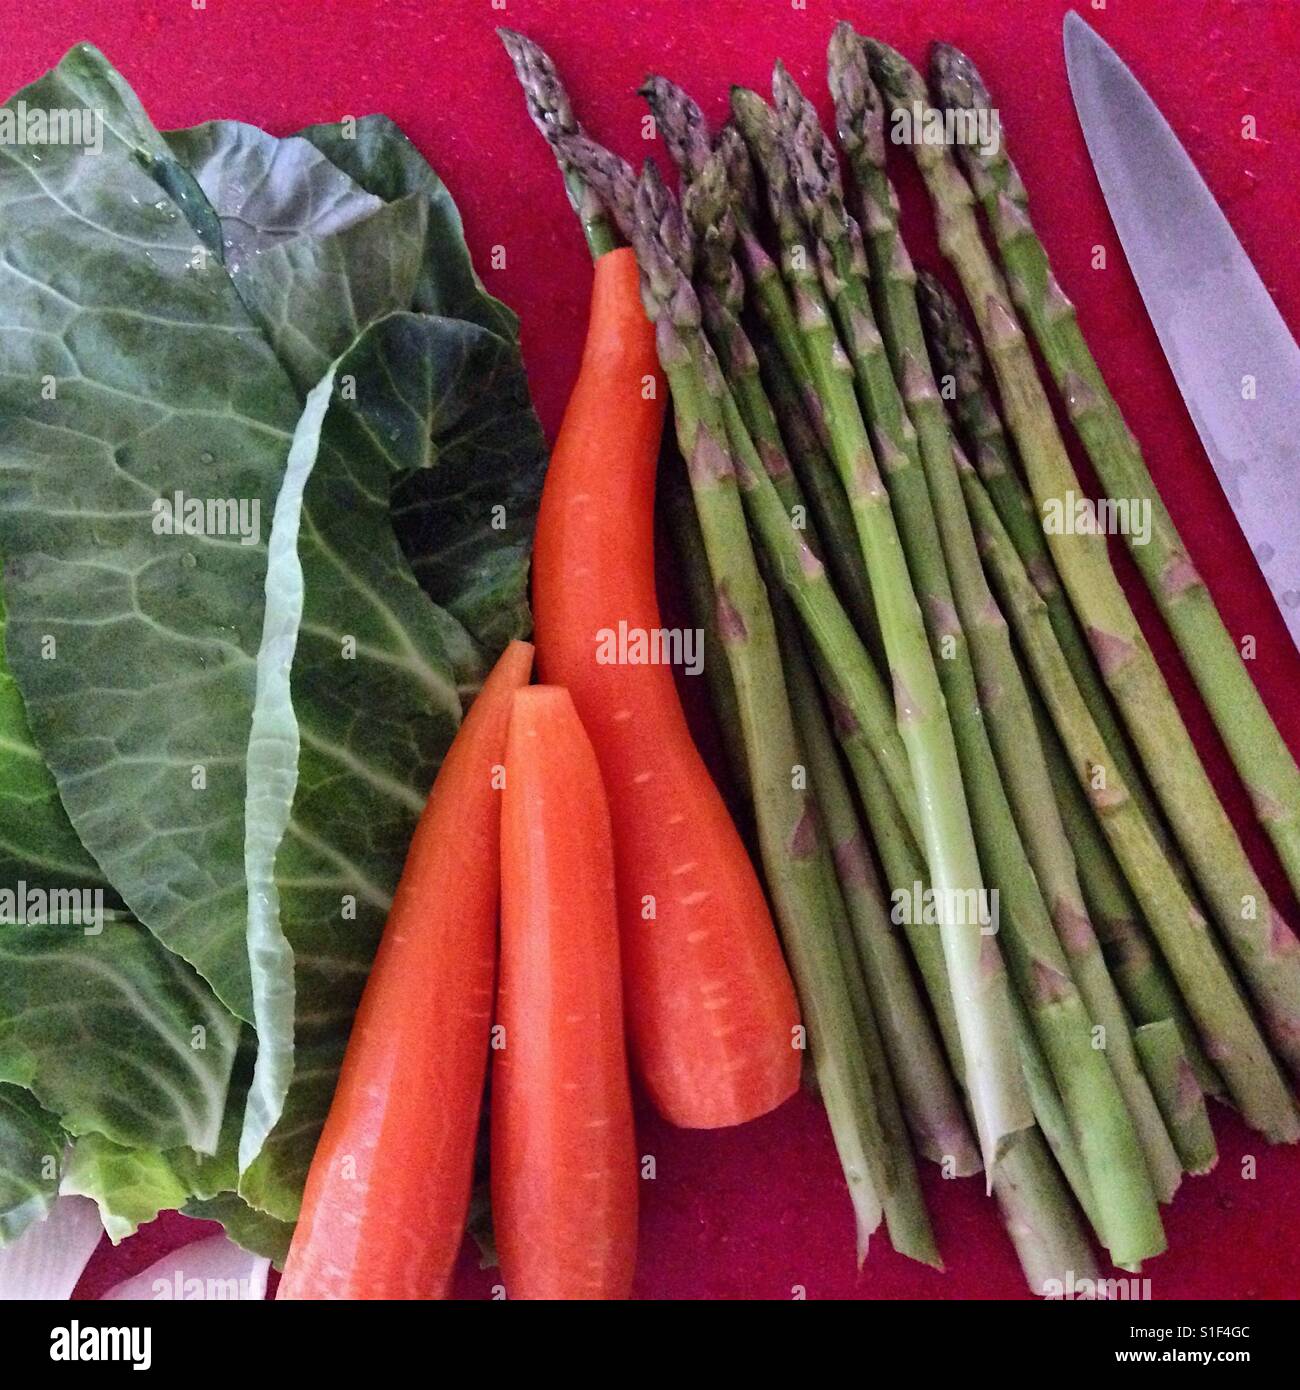 Preparing the veg Stock Photo